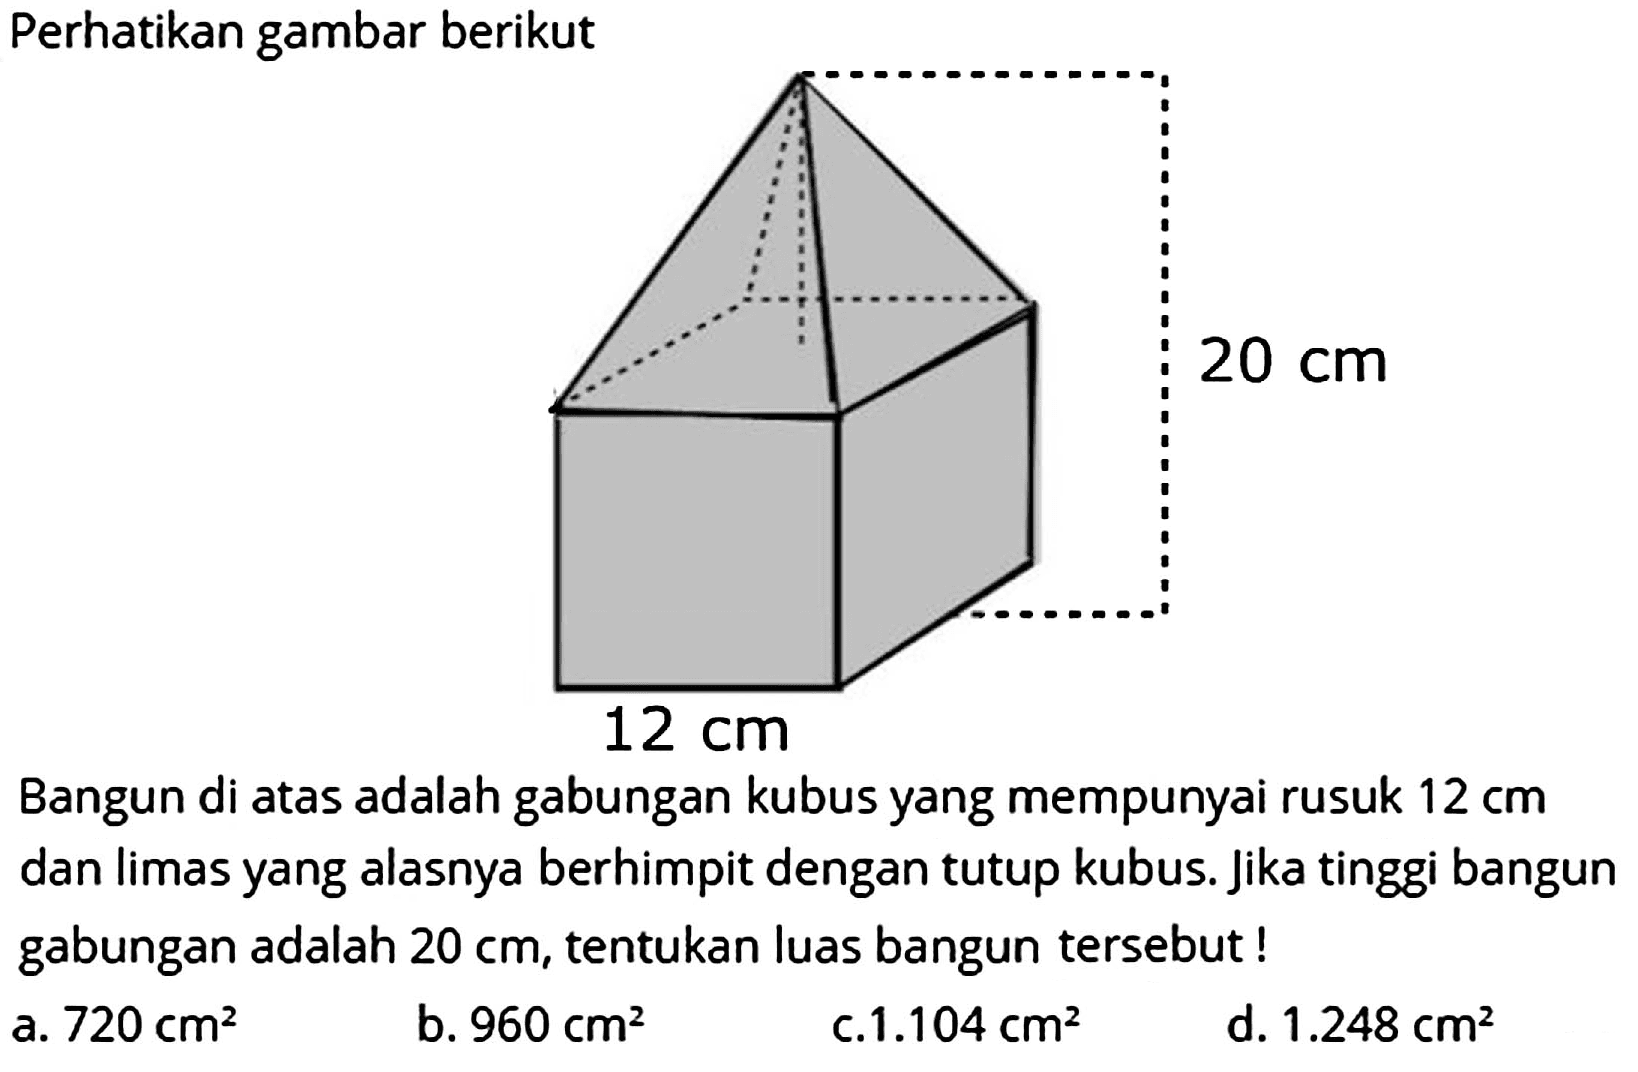 Perhatikan gambar berikut
Bangun di atas adalah gabungan kubus yang mempunyai rusuk  12 cm  dan limas yang alasnya berhimpit dengan tutup kubus. Jika tinggi bangun gabungan adalah  20 cm , tentukan luas bangun tersebut !
a.  720 cm^(2) 
b.  960 cm^(2) 
c.  1.104 cm^(2) 
d.  1.248 cm^(2) 